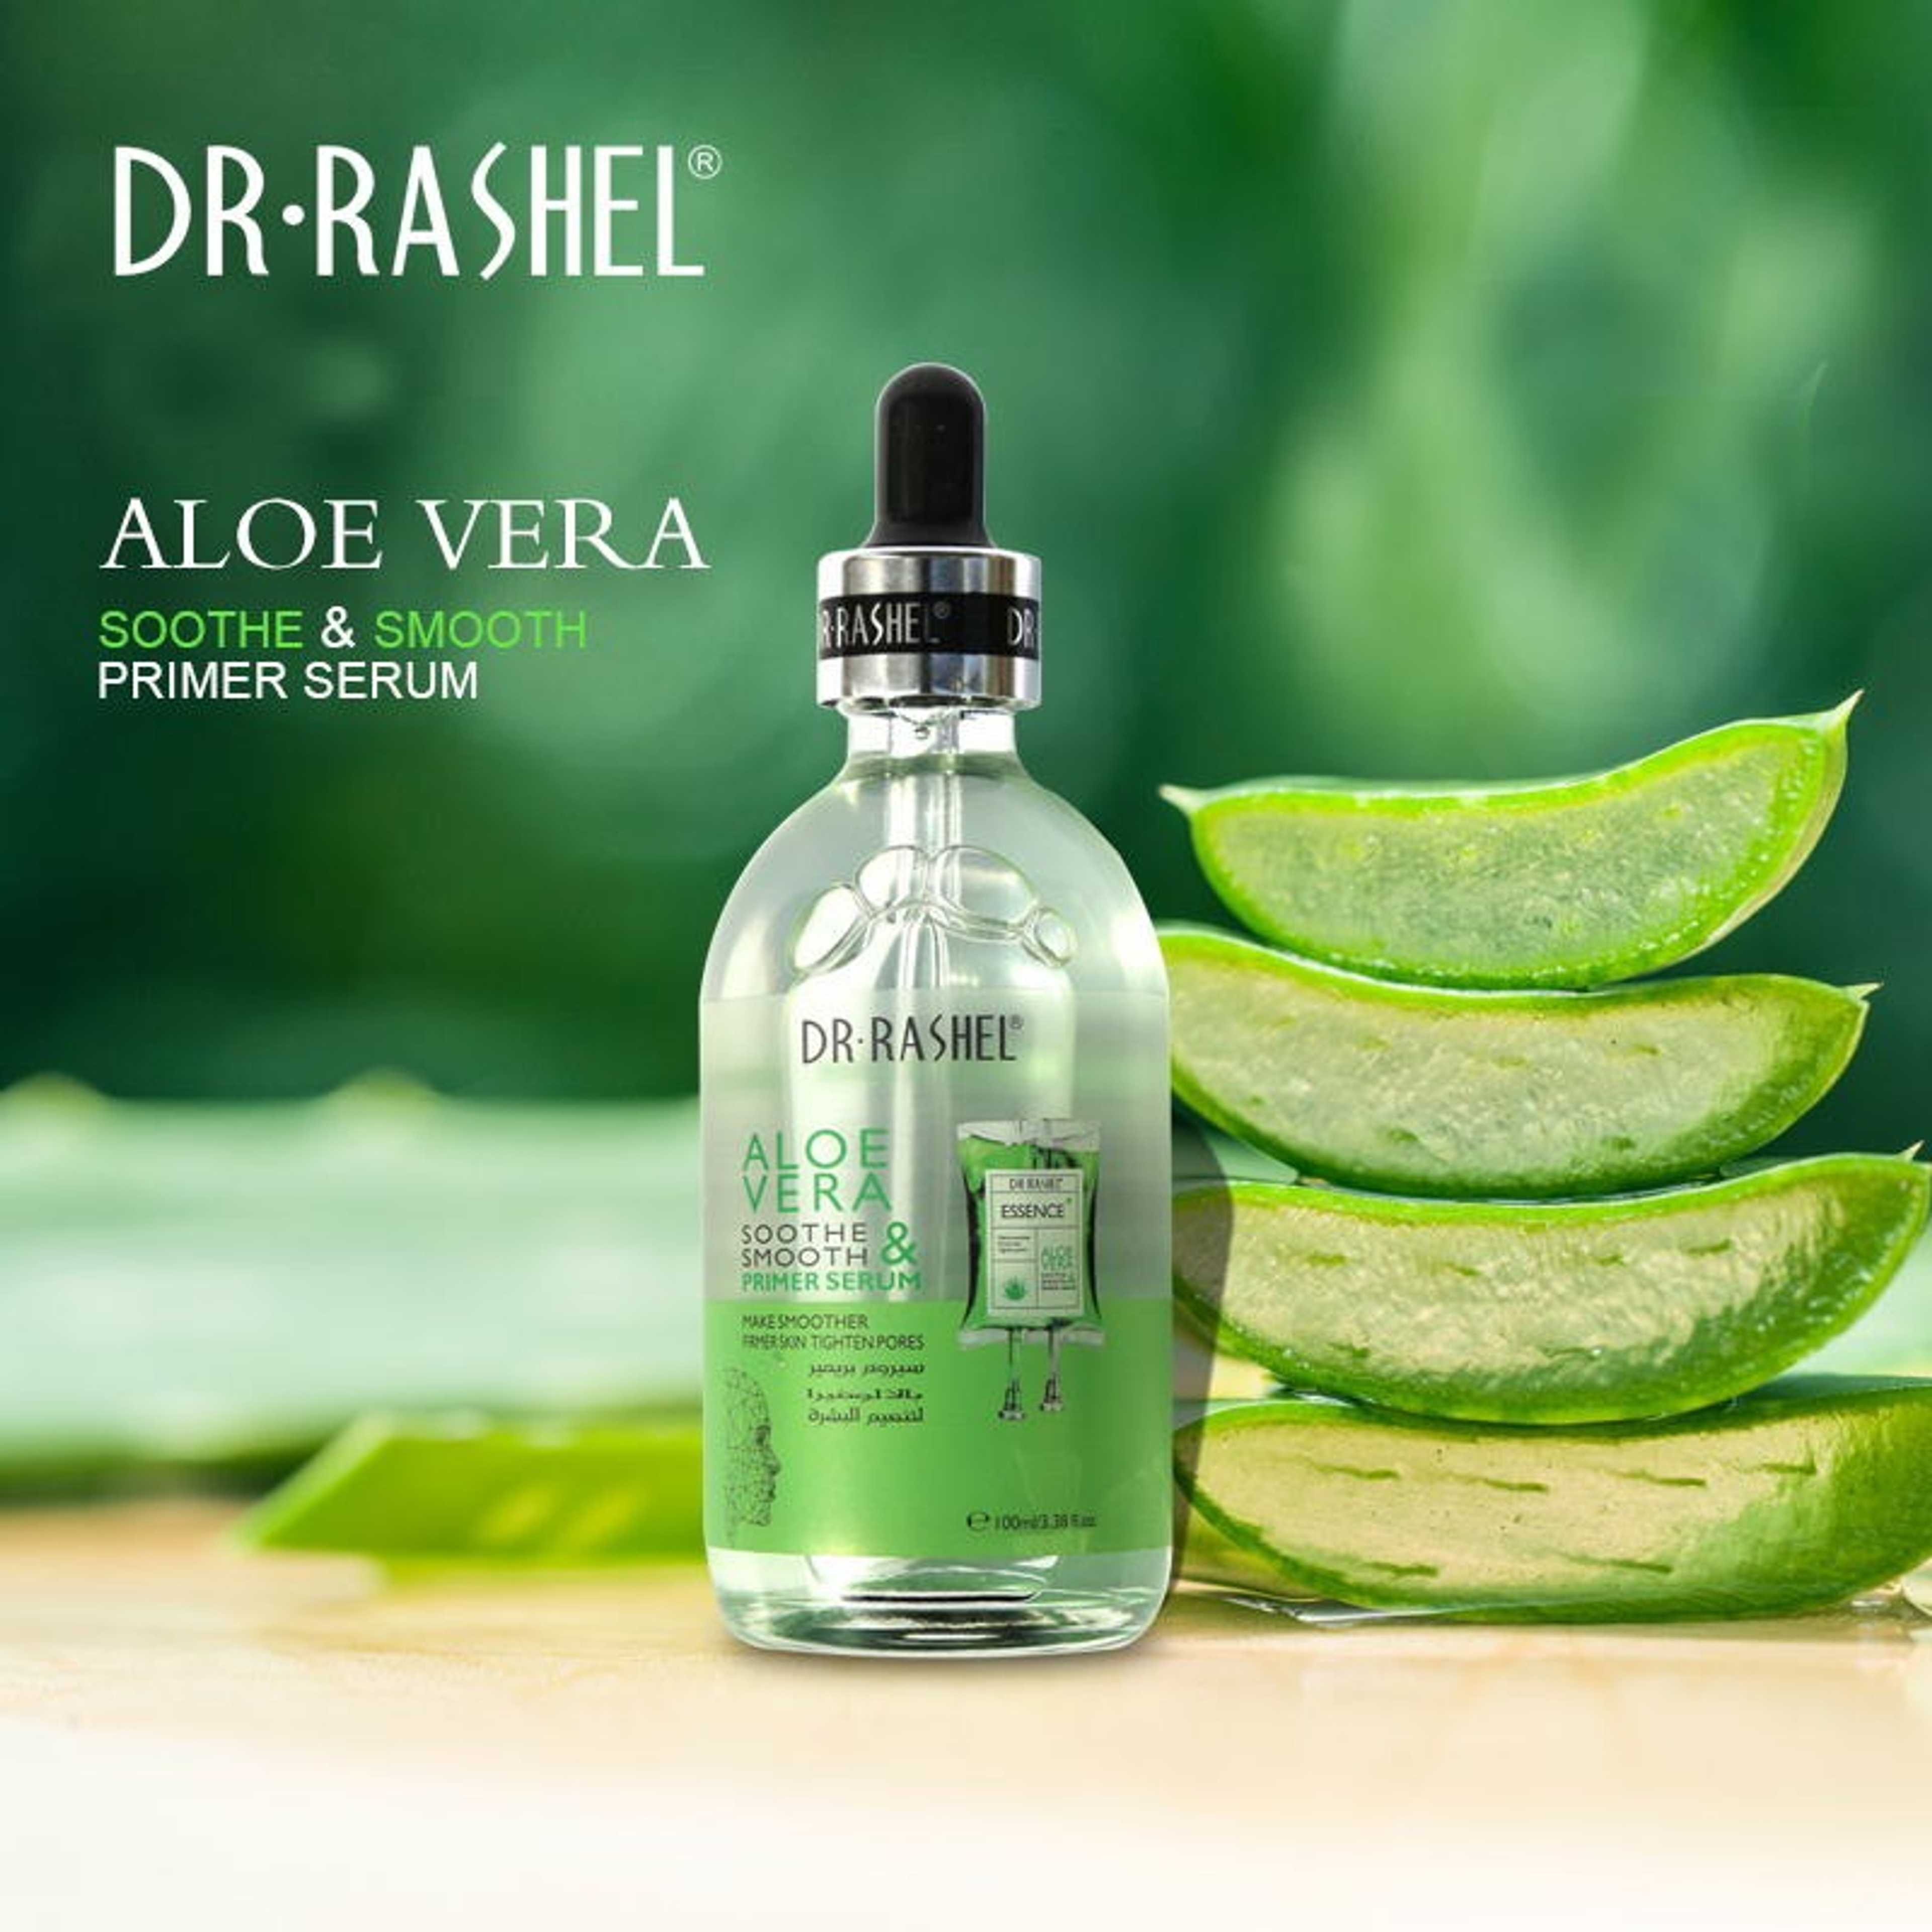 Dr Rashel Aloe Vera Soothe & Smooth Primer Serum